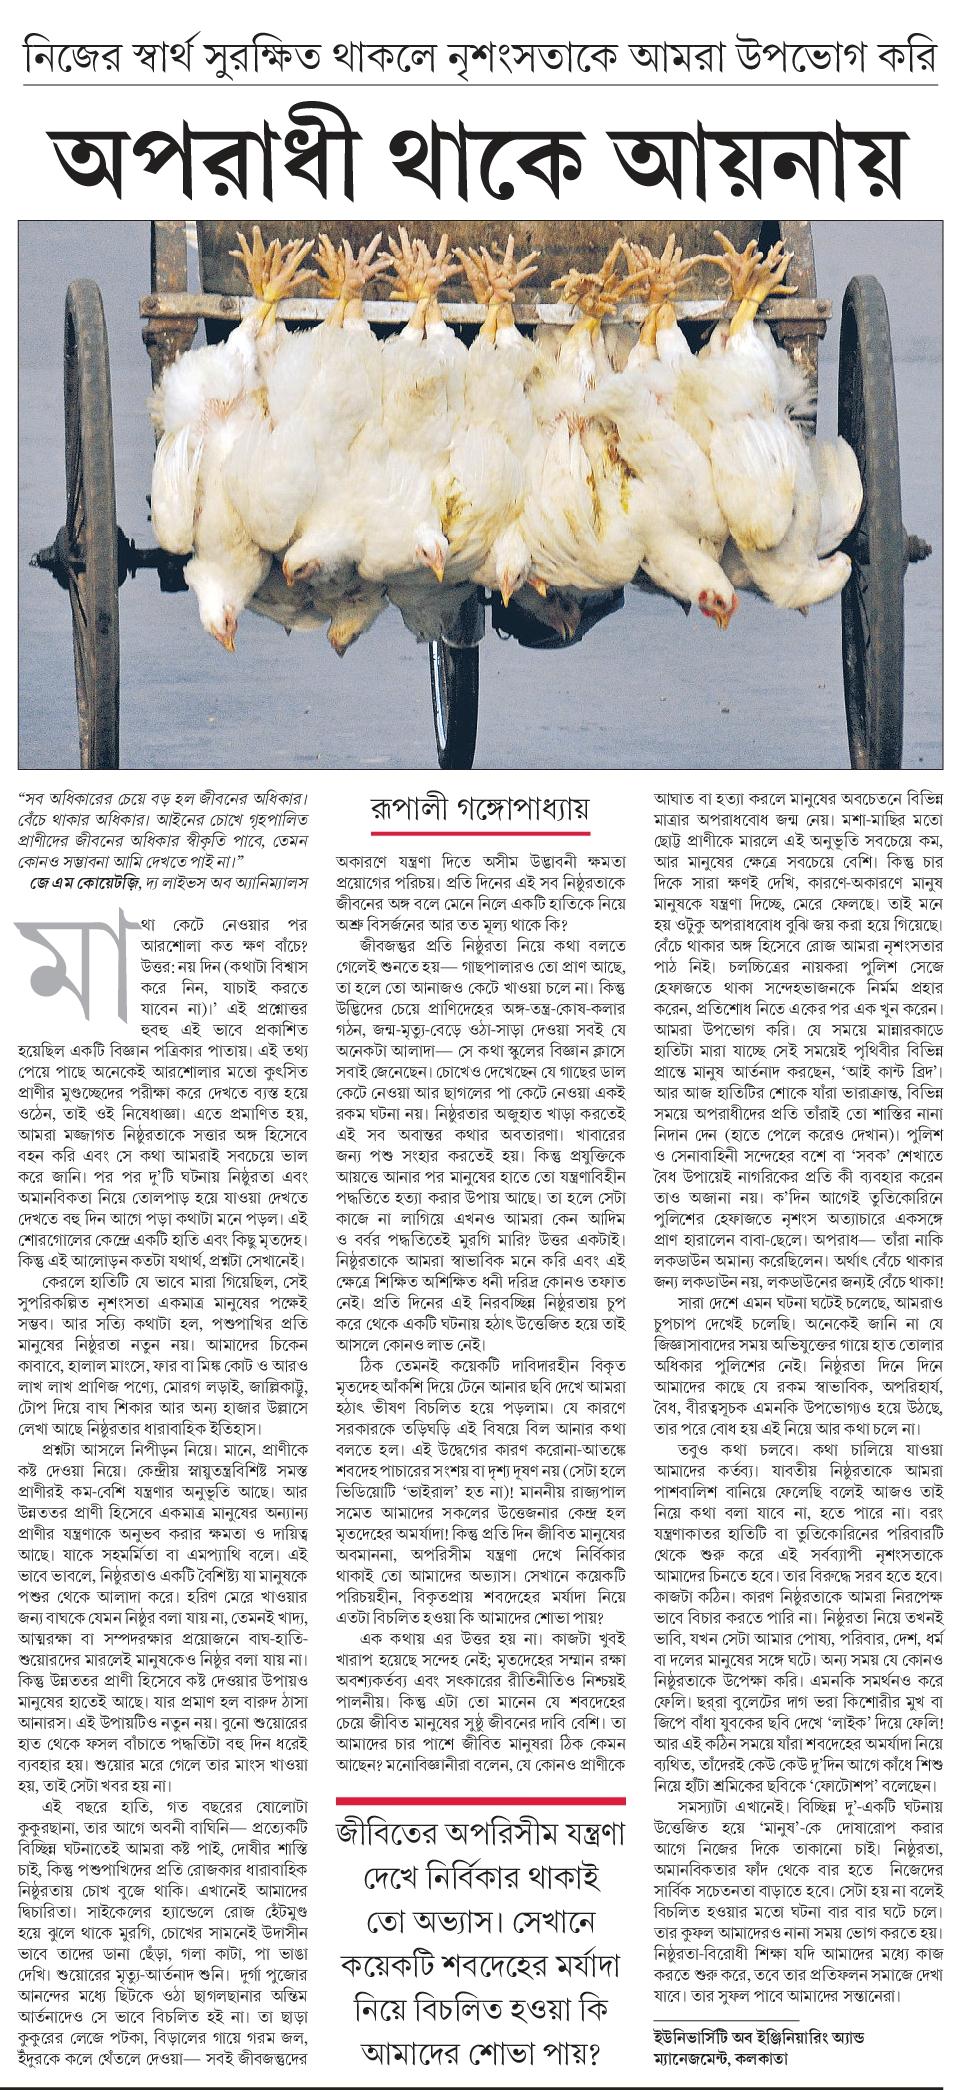 read anandabazar patrika online bengali